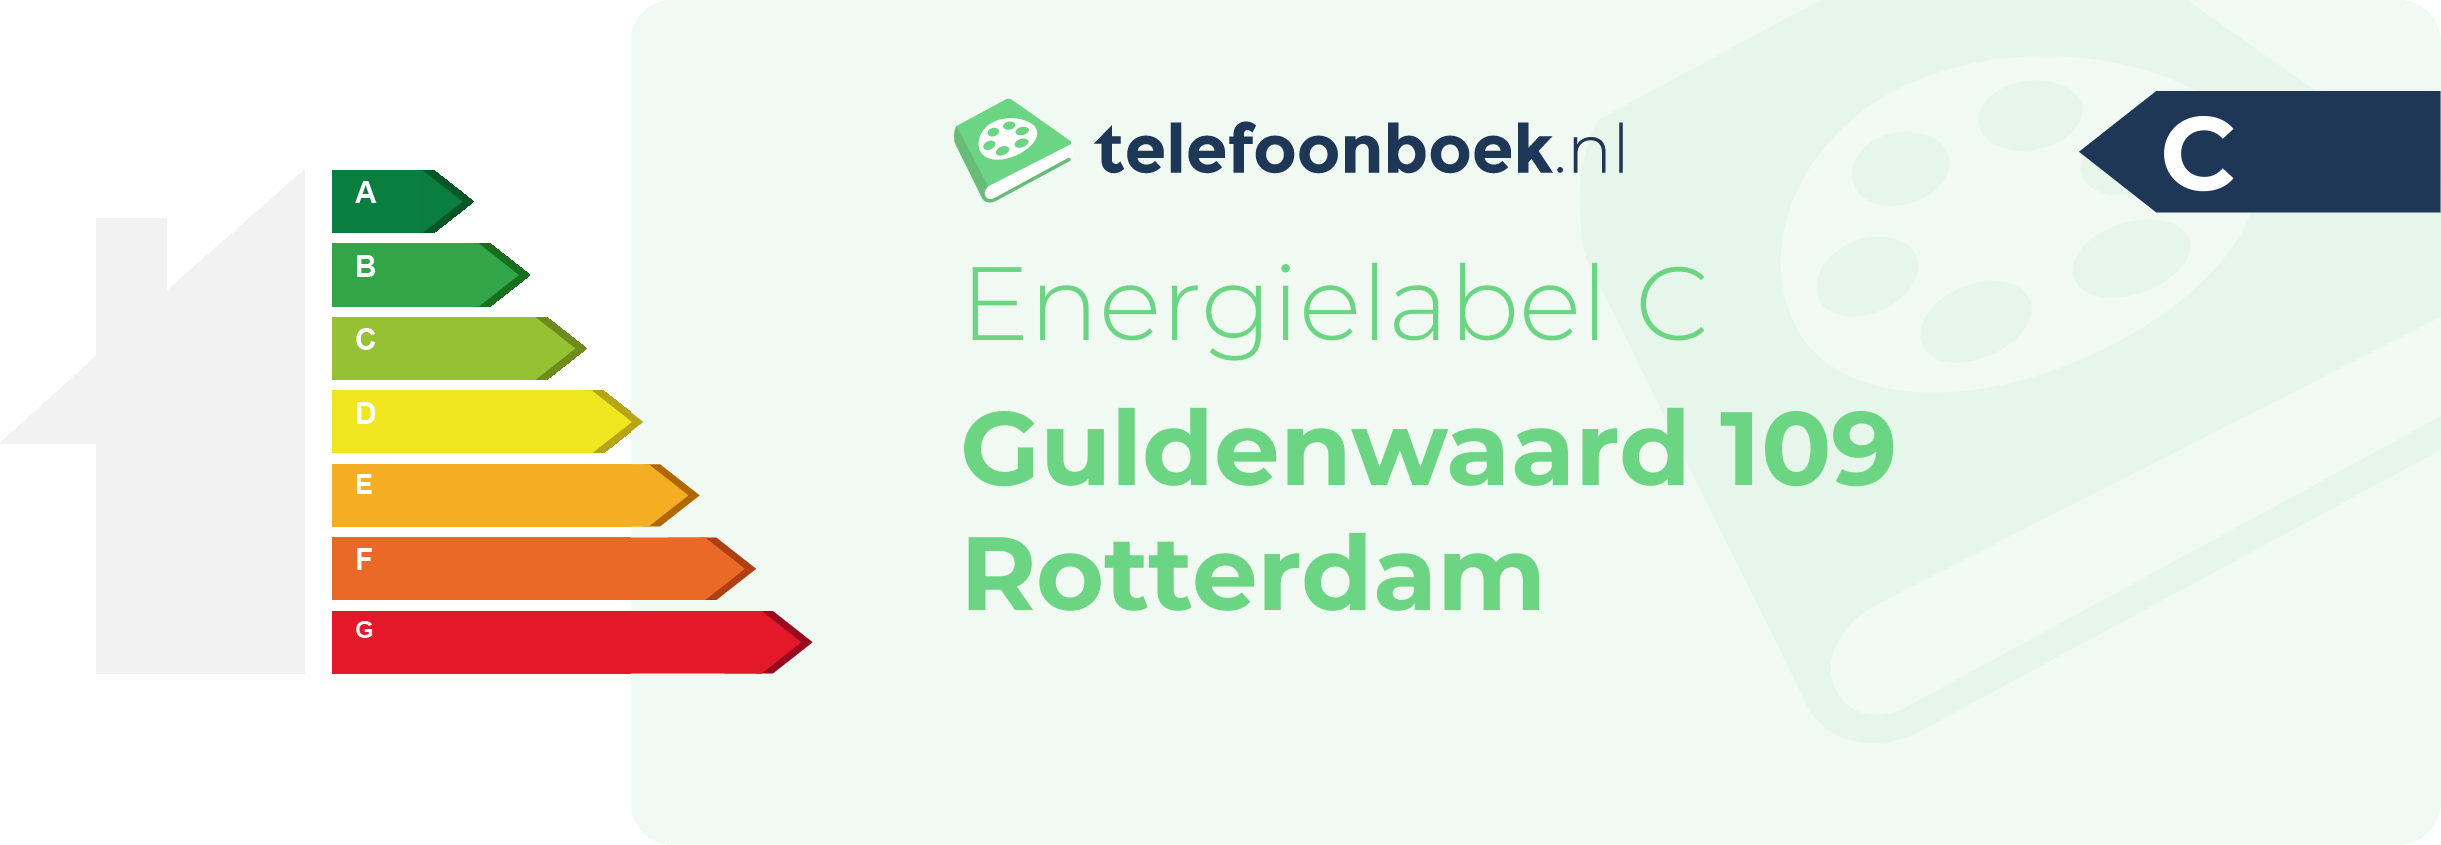 Energielabel Guldenwaard 109 Rotterdam